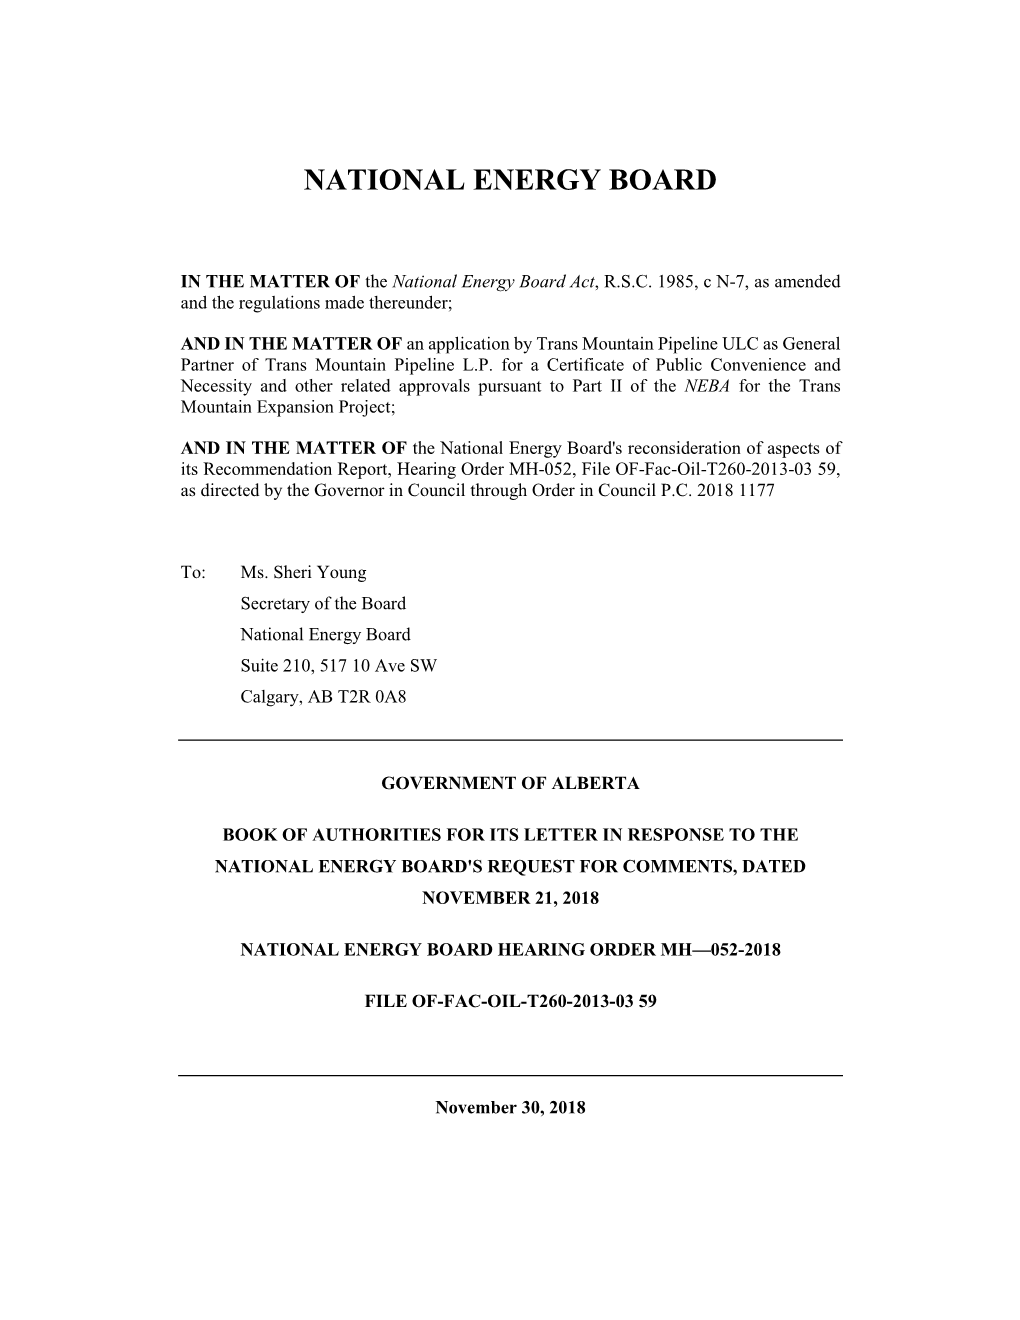 National Energy Board